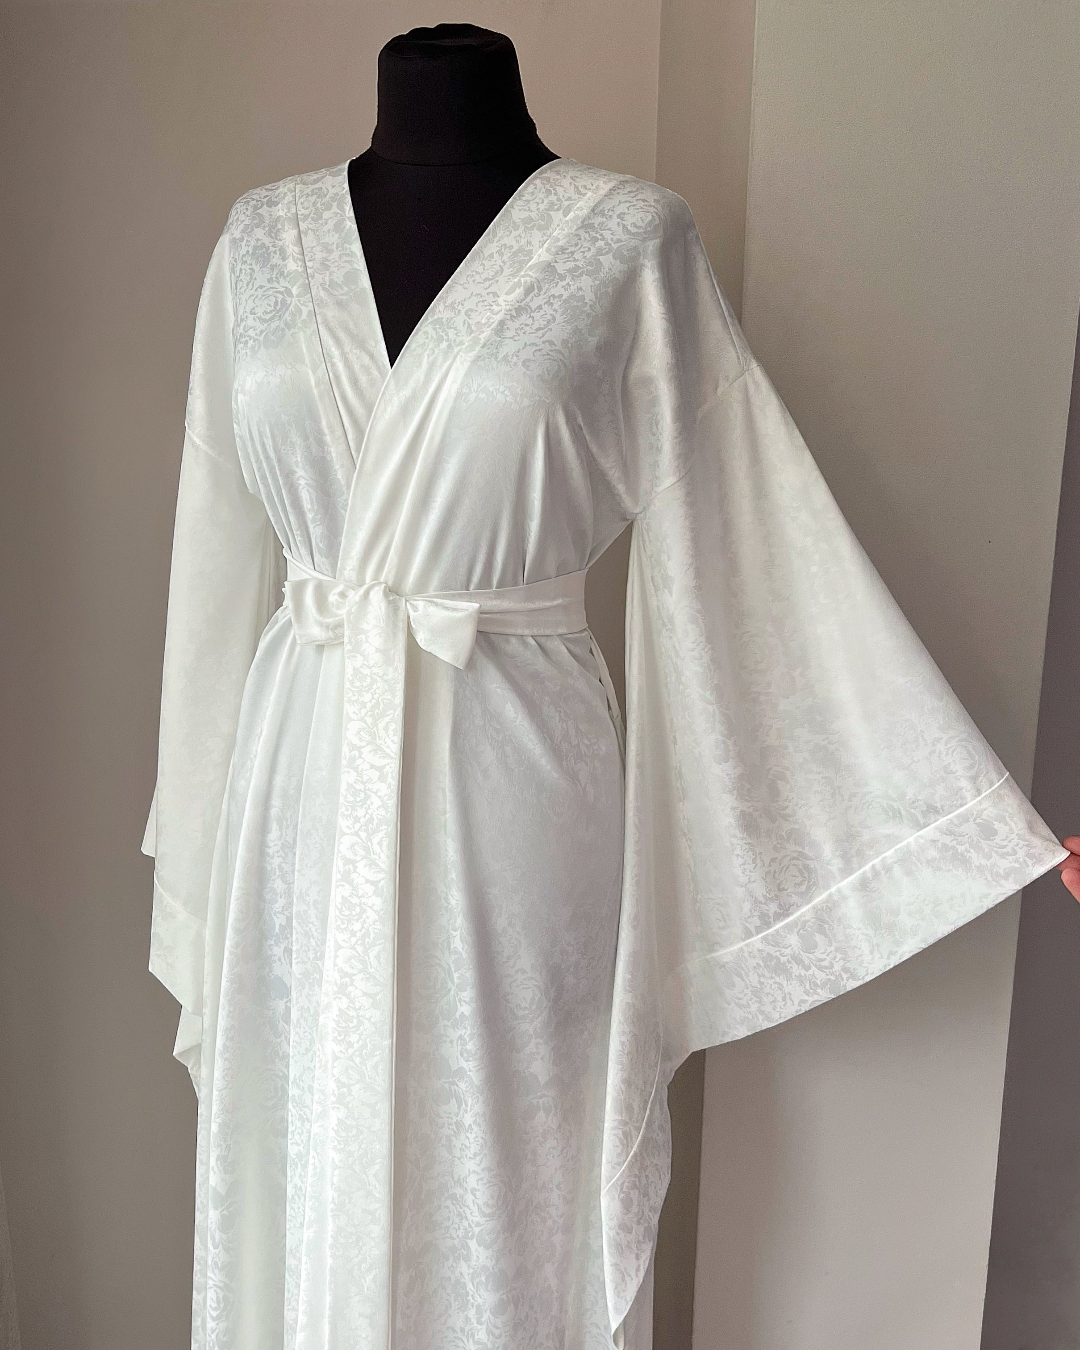 Kimono bride robe for wedding day